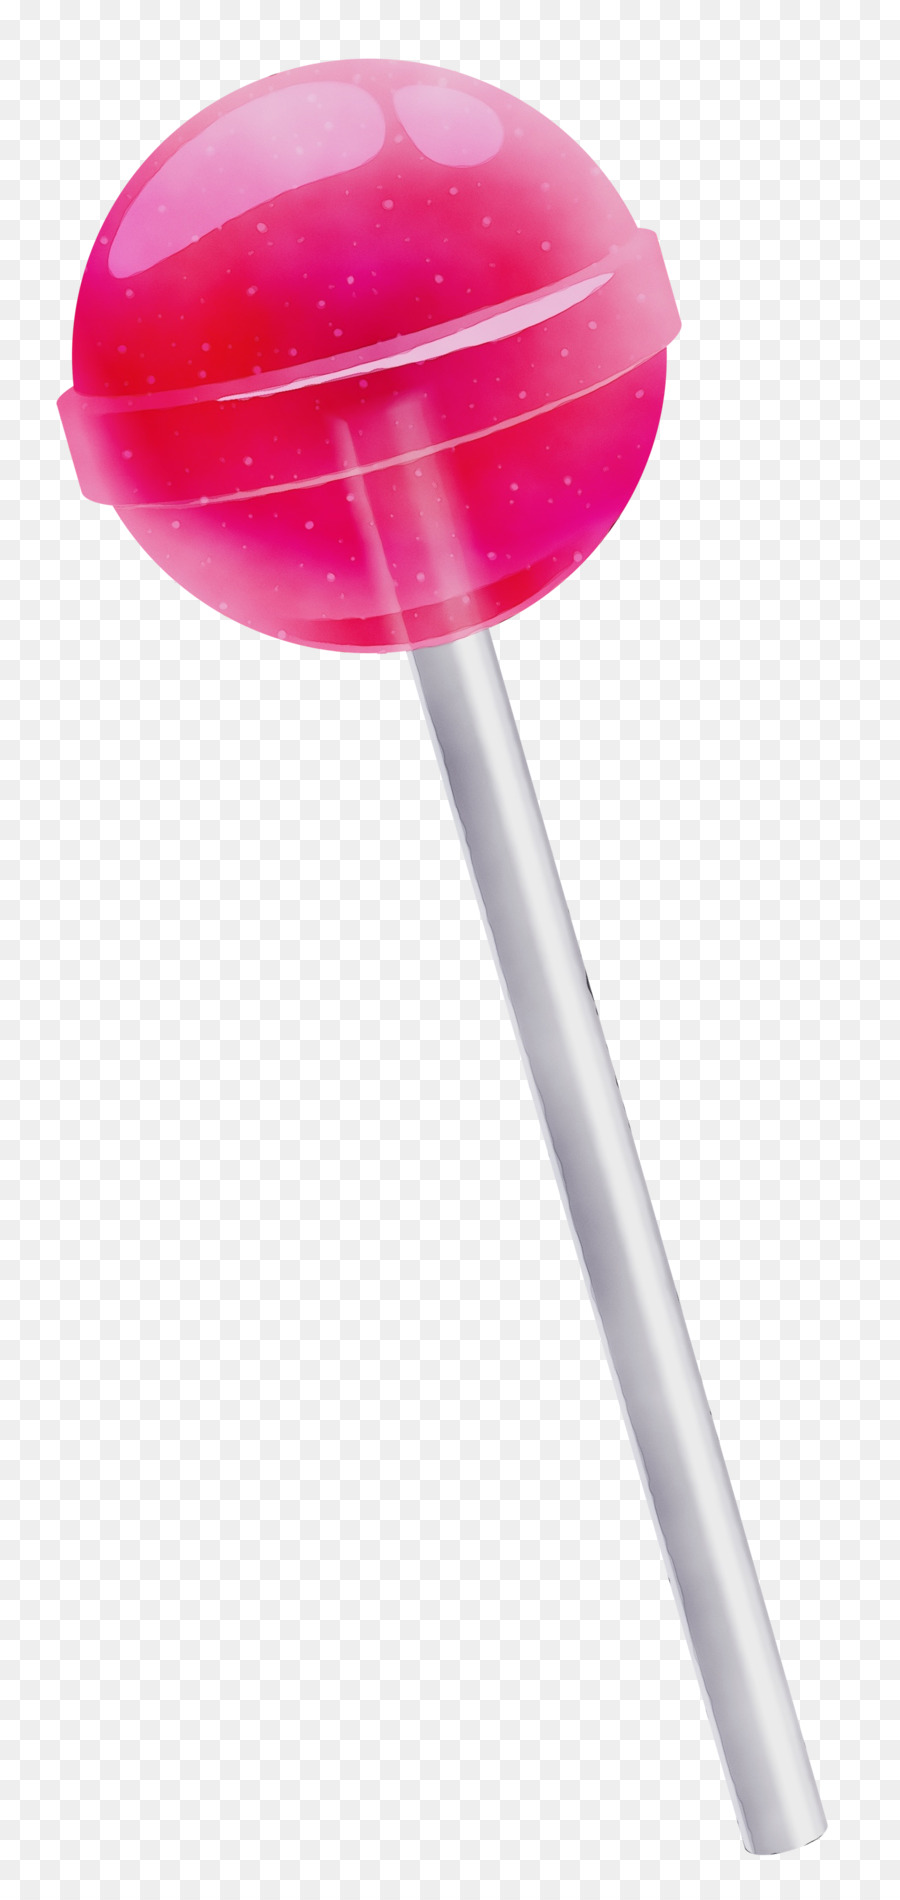 Lollipop Candy Transparency Bonbon Chupa Chups